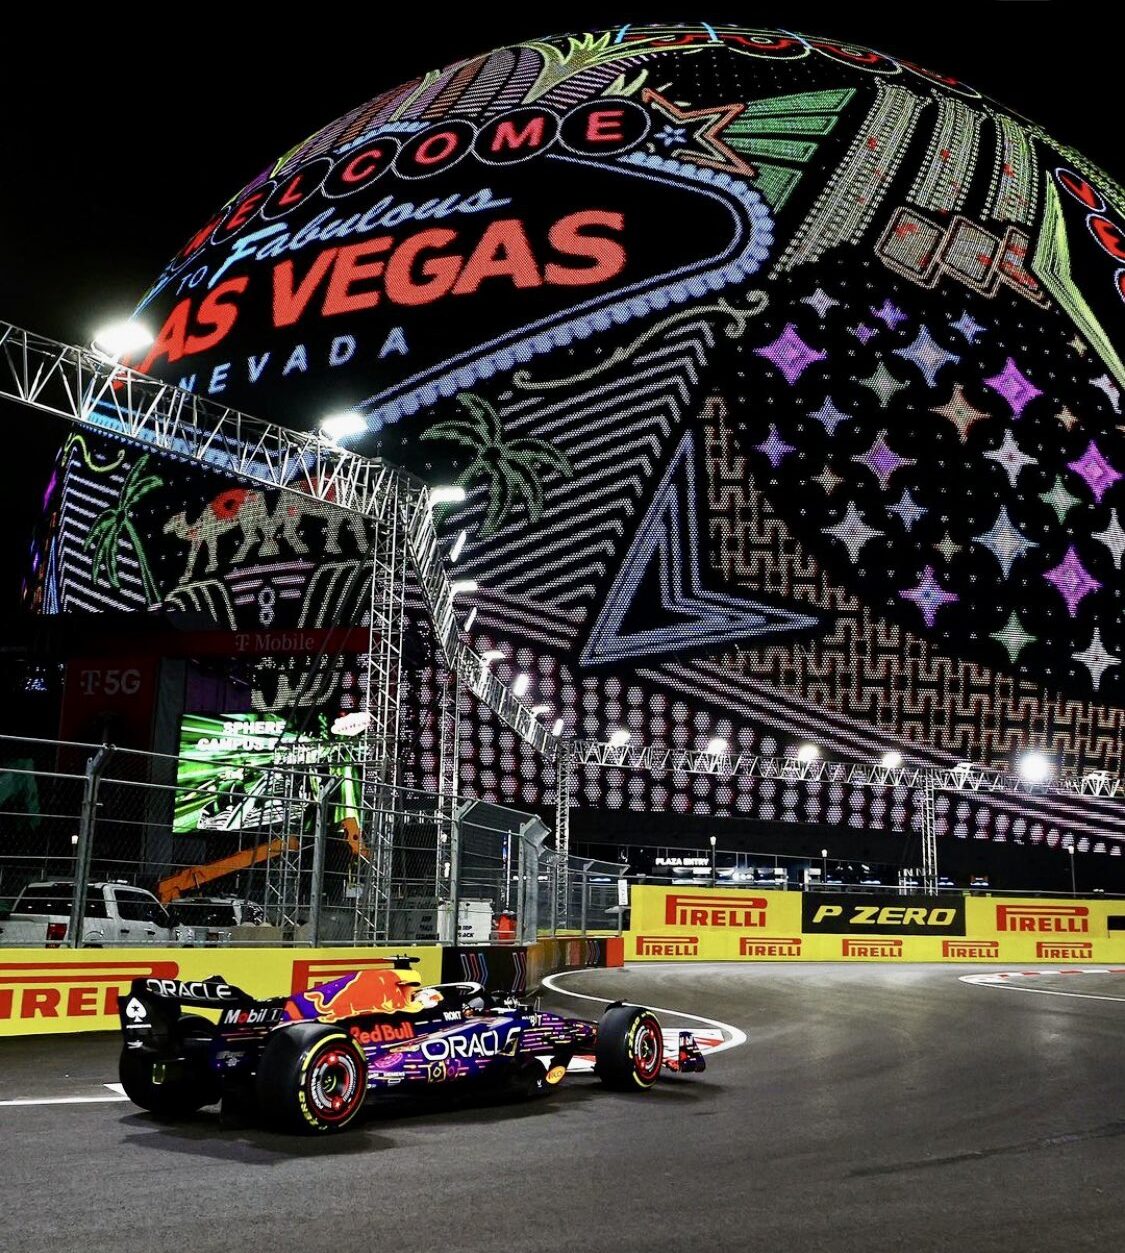 Max Verstappen leading the 2023 Las Vegas GP